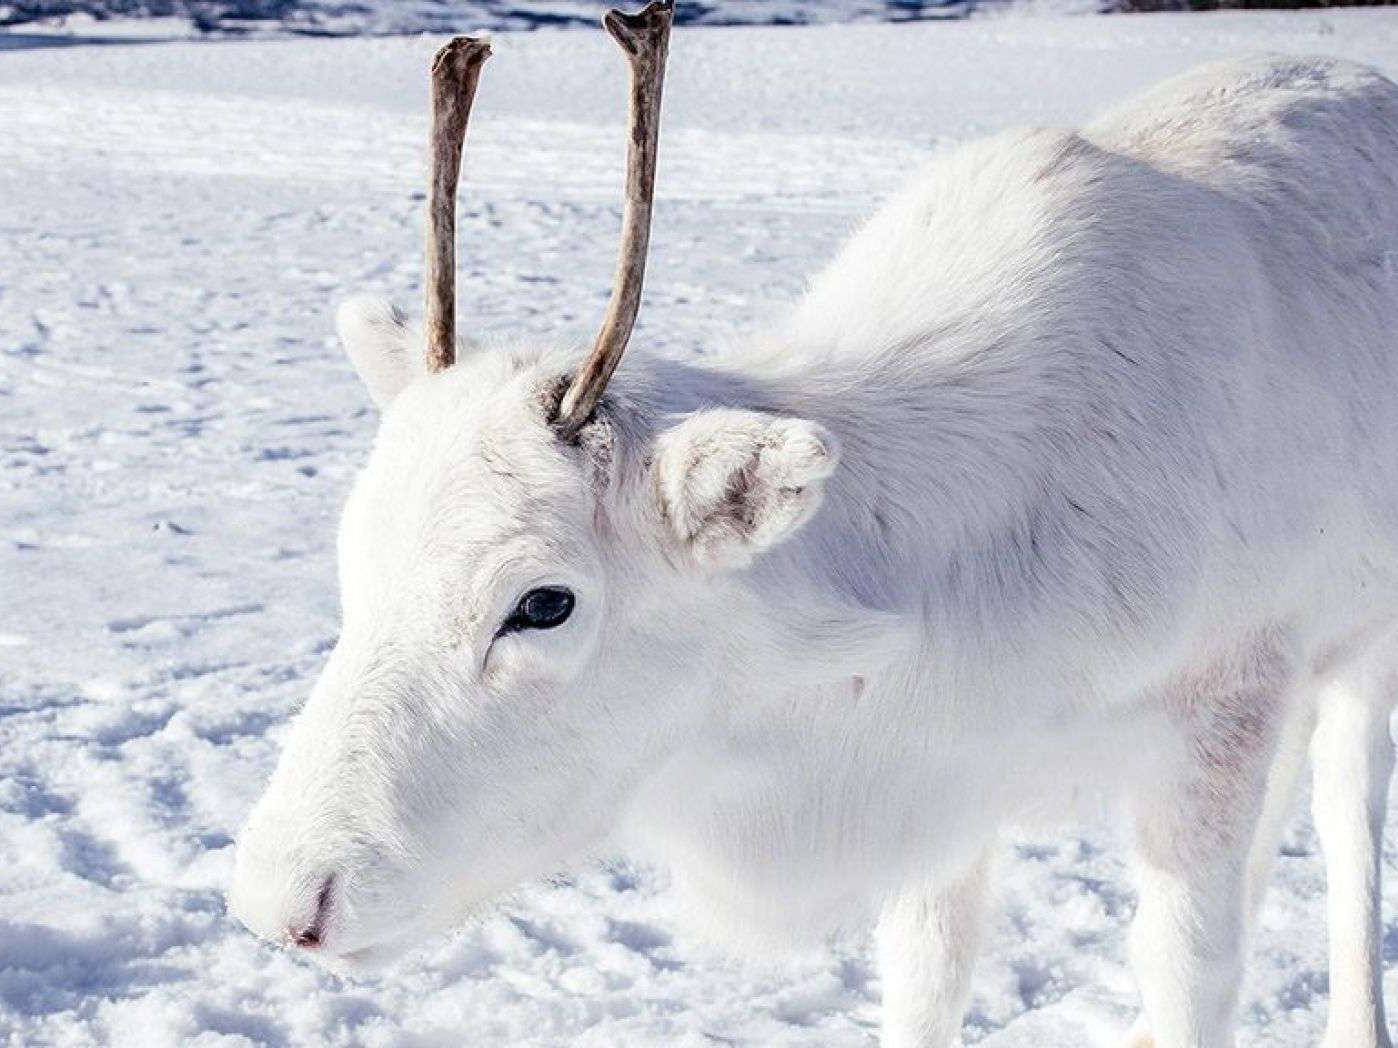 Photographer spots rare white reindeer